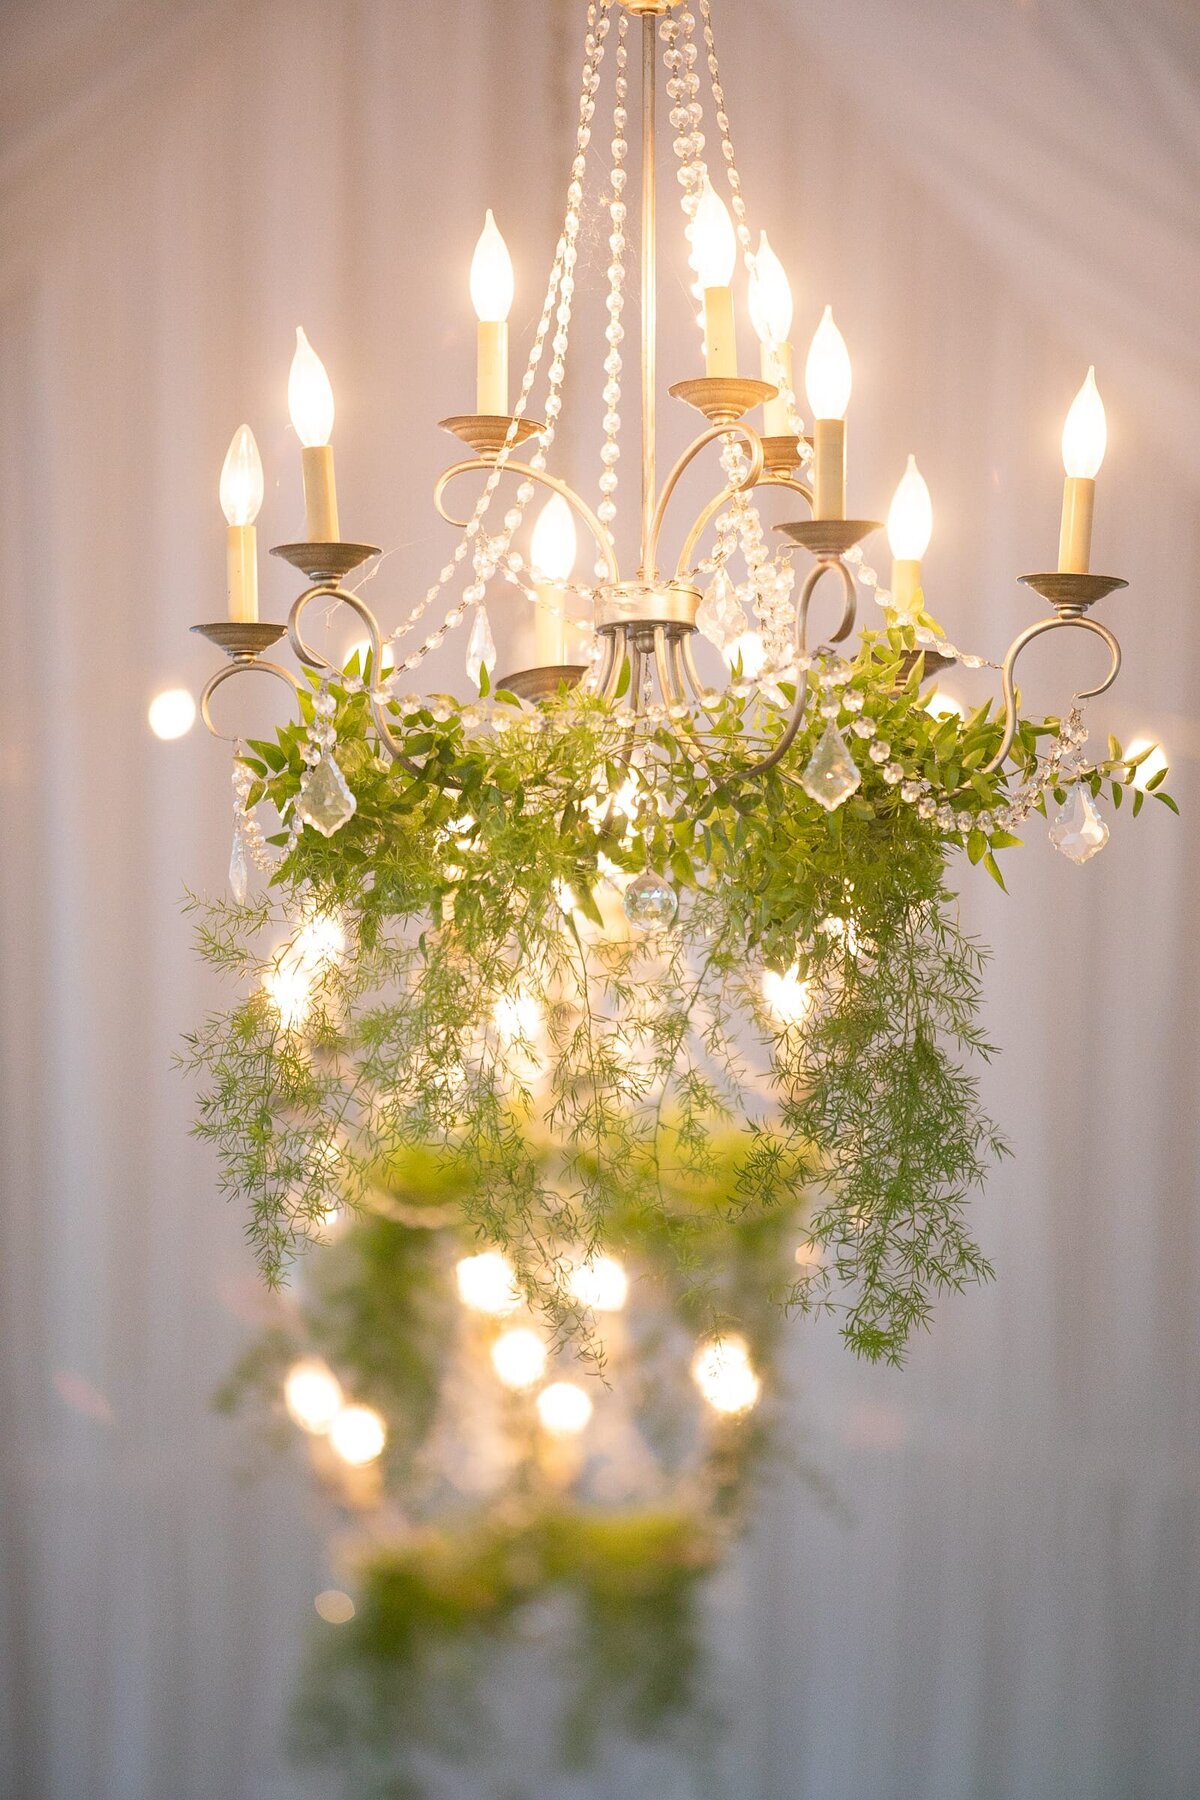 chandeliers-greenery-tent-wedding